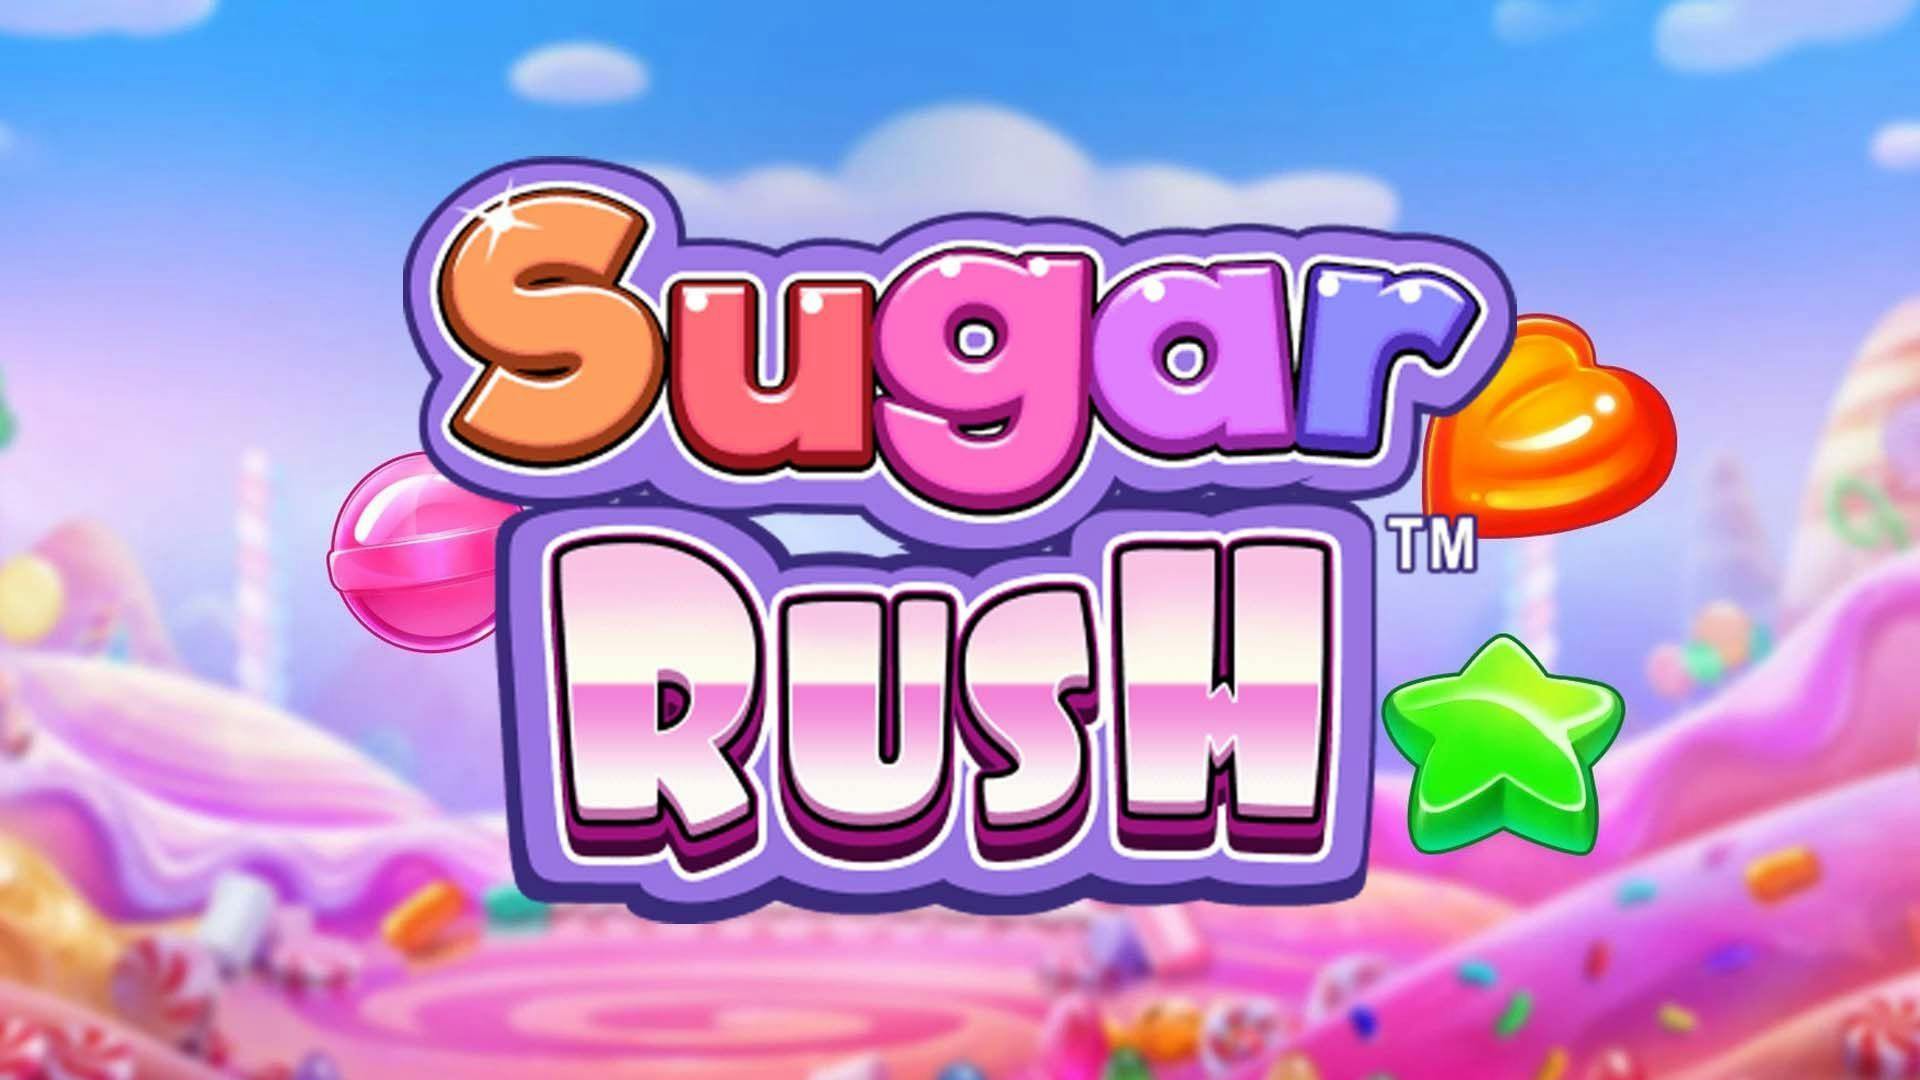 Sugar Rush Slot Machine Online Free Game Play